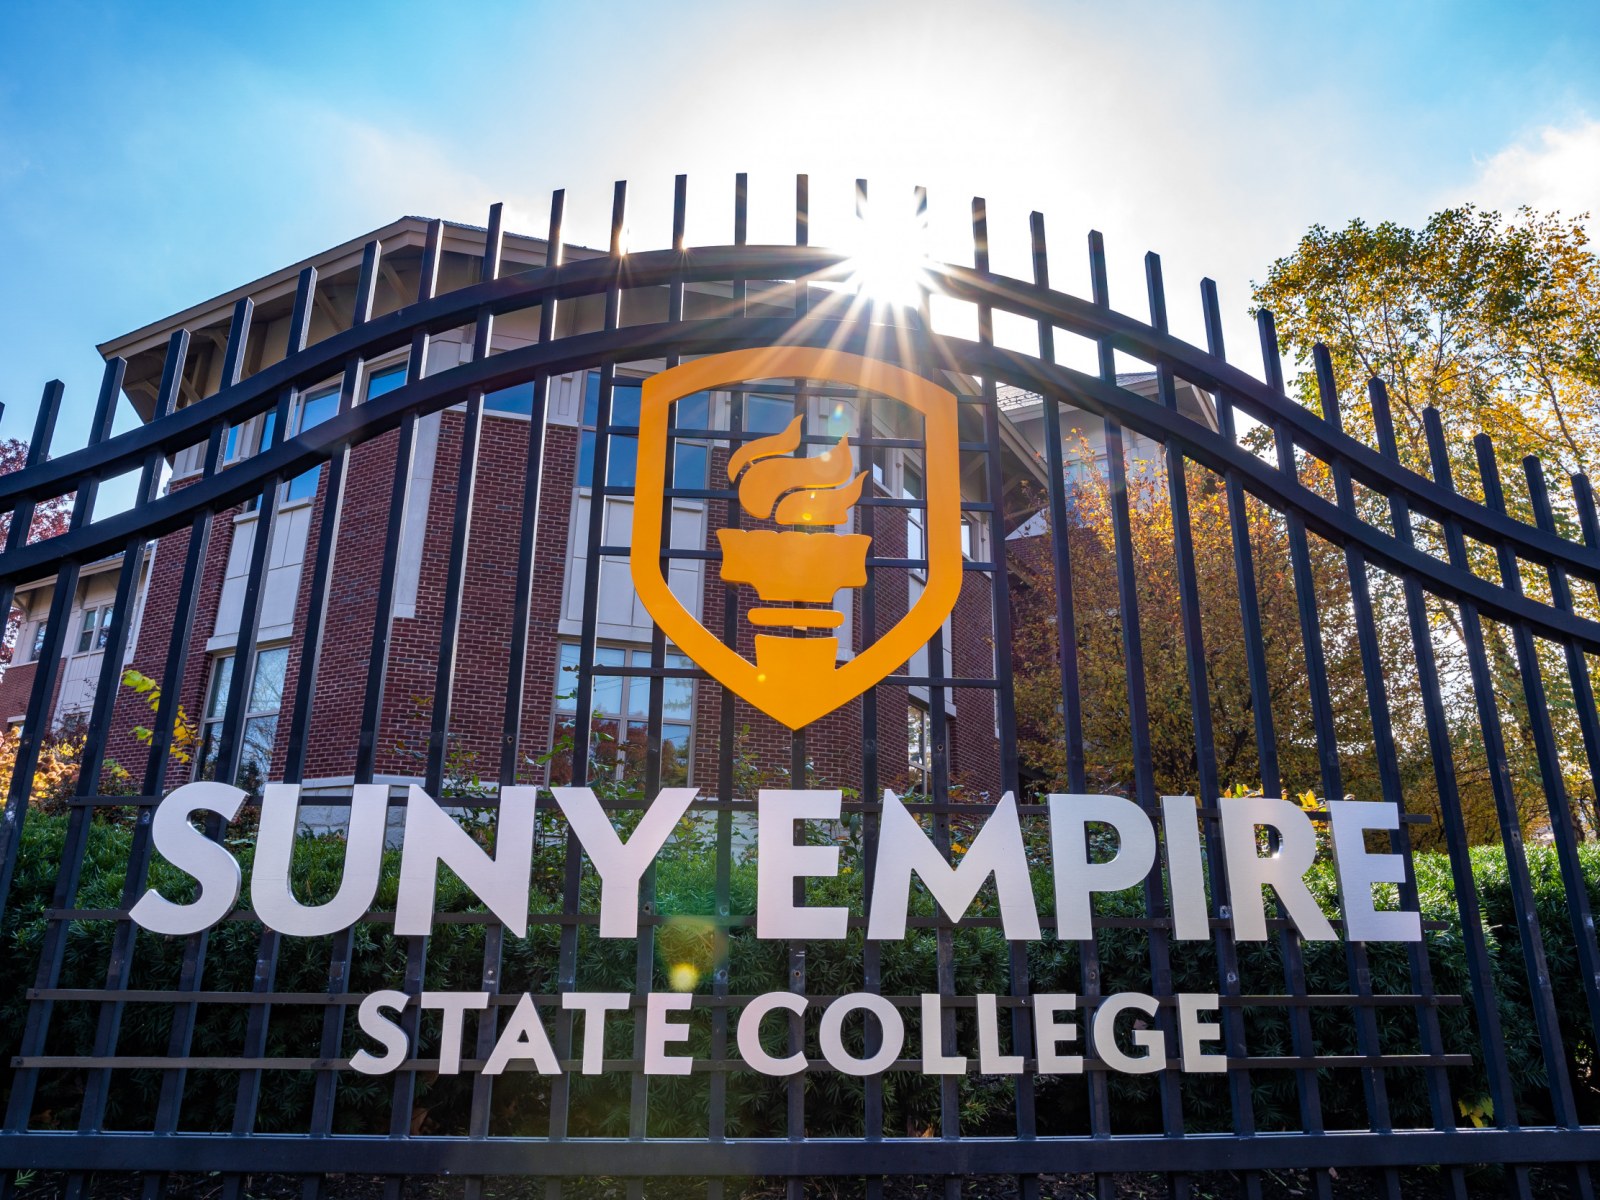 SUNY Empire State University: Online Degree Rankings & Ratings